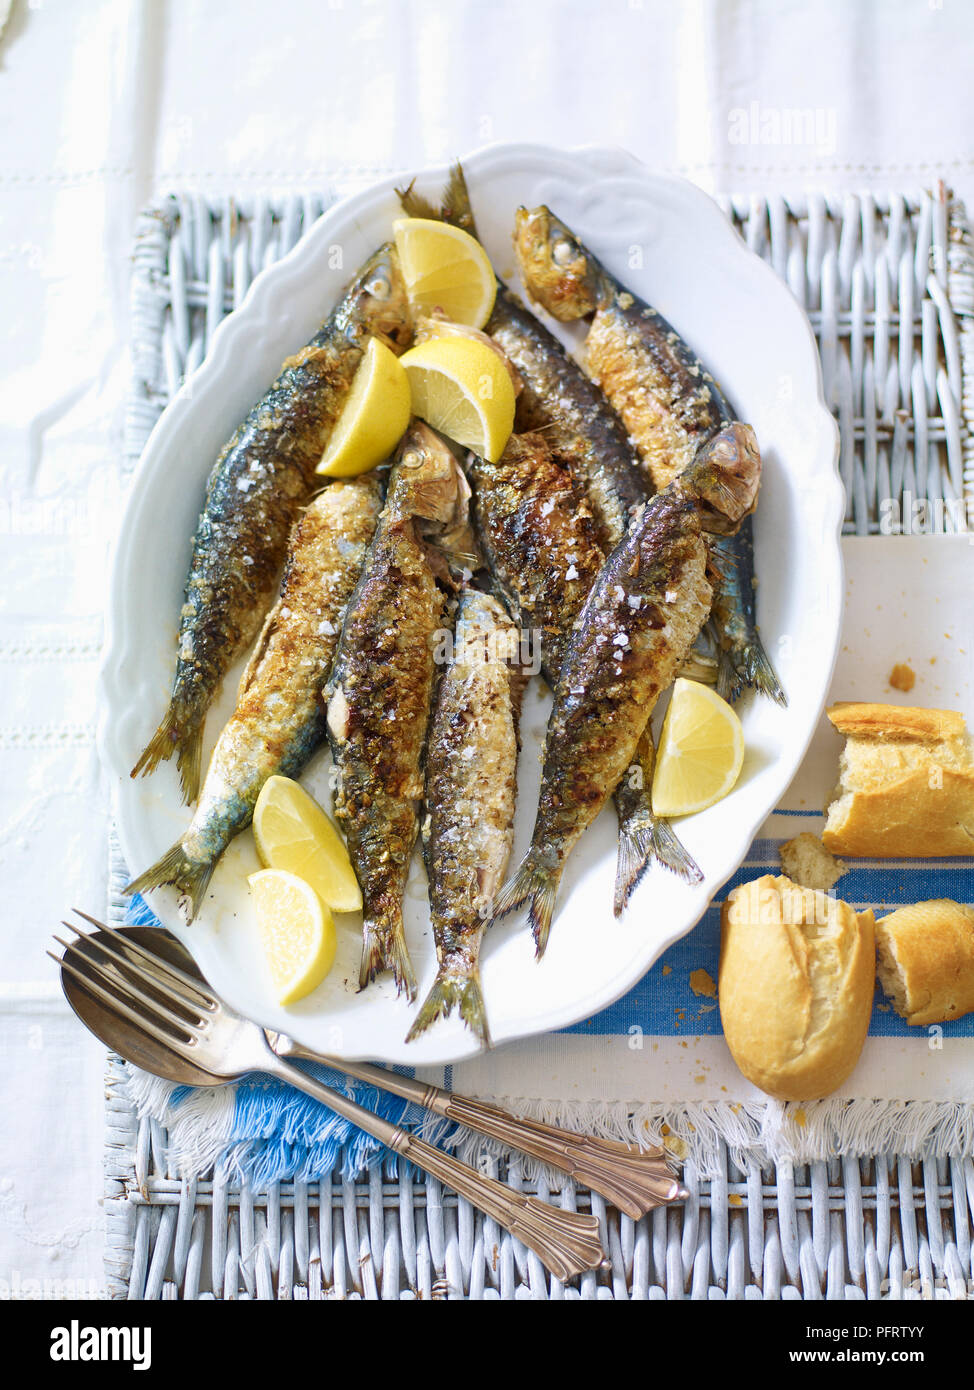 Sardinas a la plancha, Grilled sardines with lemons and bread Stock Photo